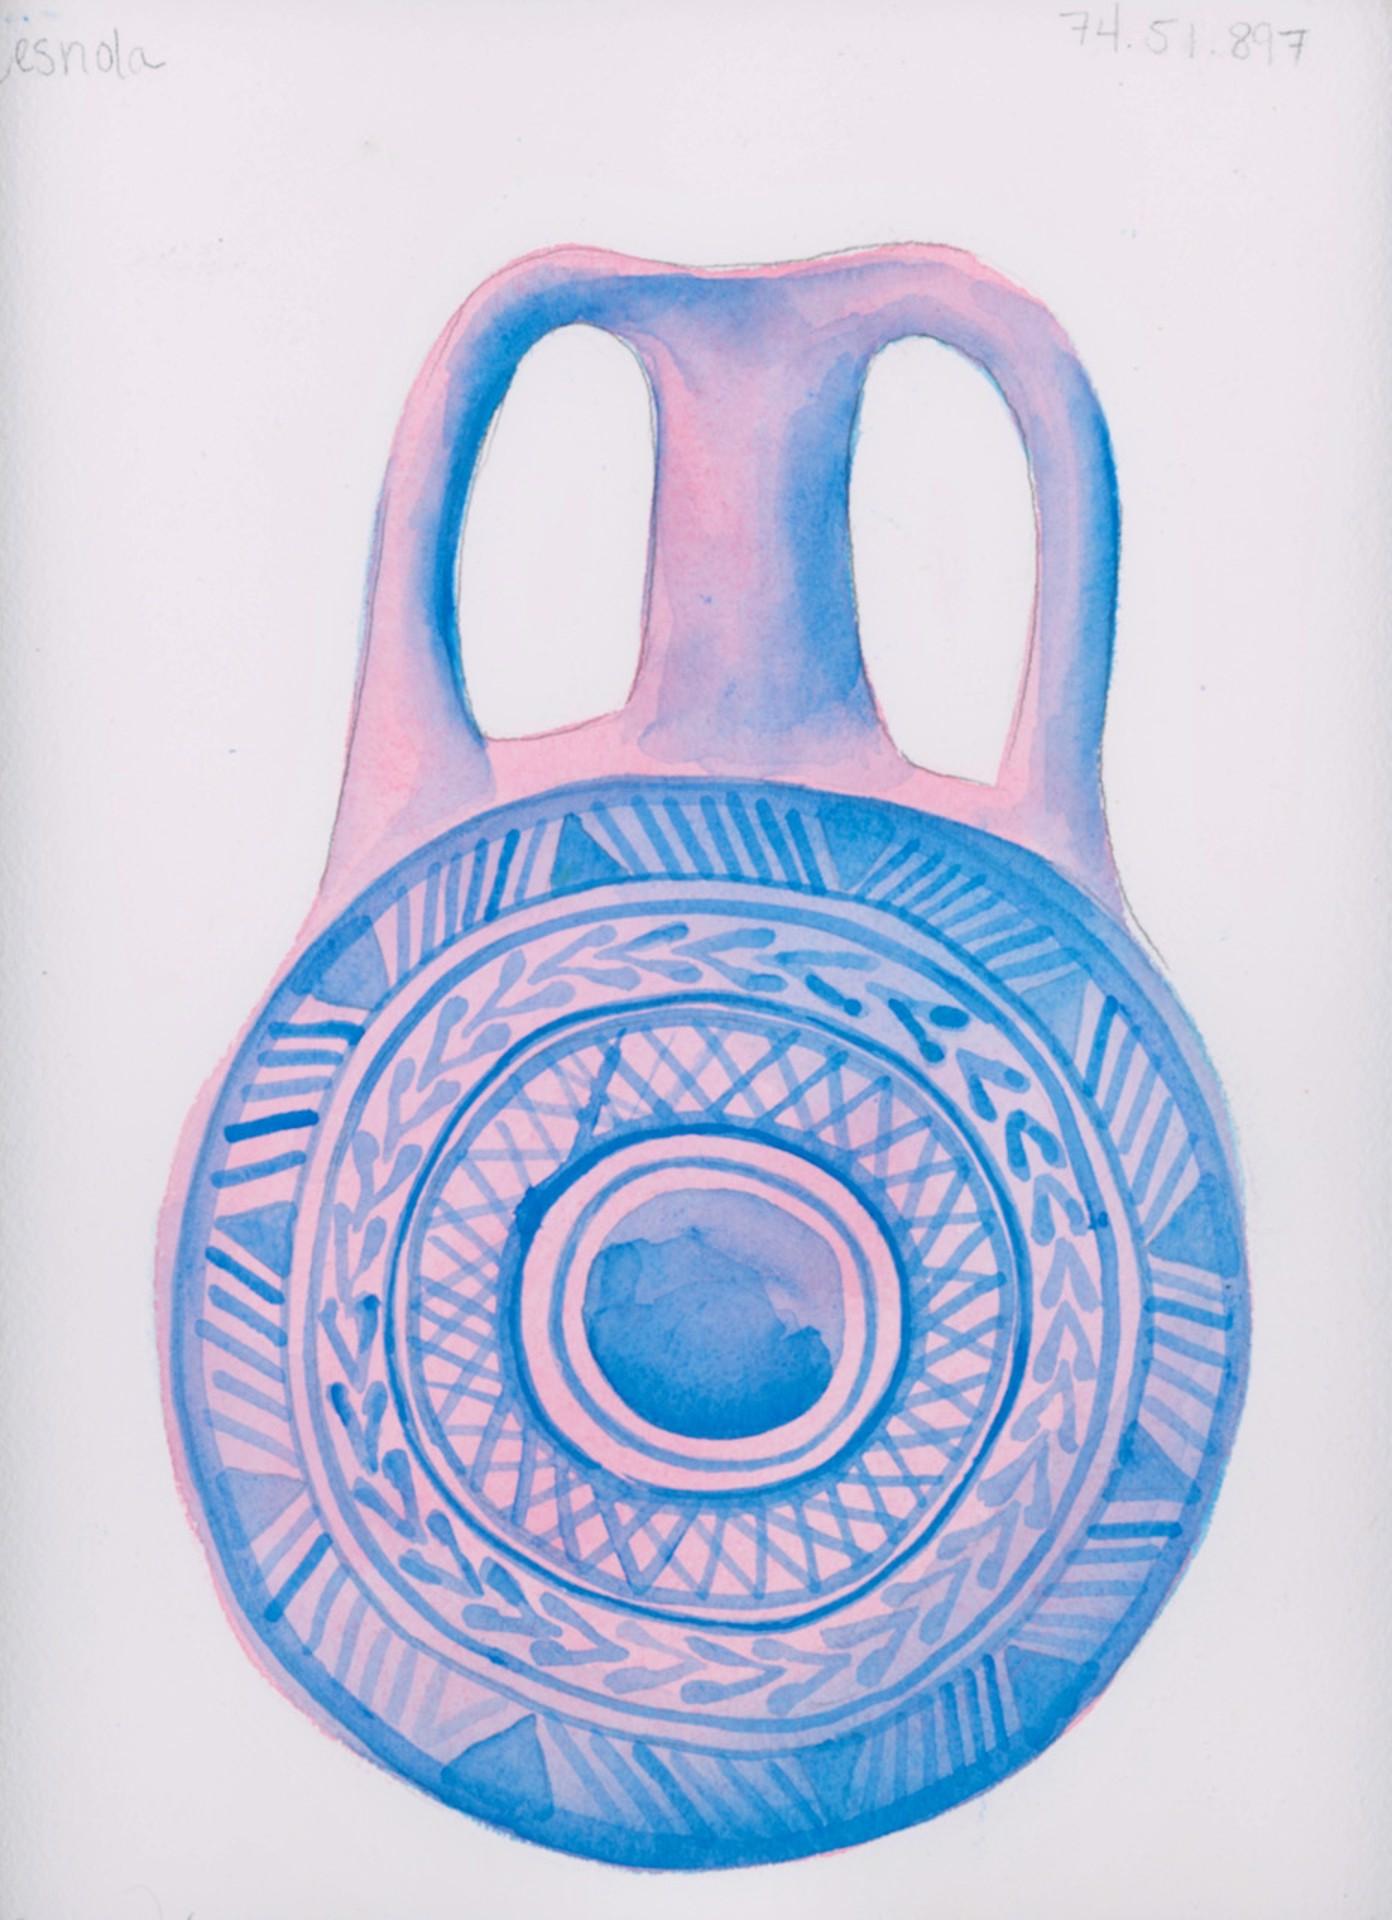 Cat Rigdon Still-Life Painting - Cesnola Geometric Pilgrim Flask 74.51.897, gouache painting, pottery vase